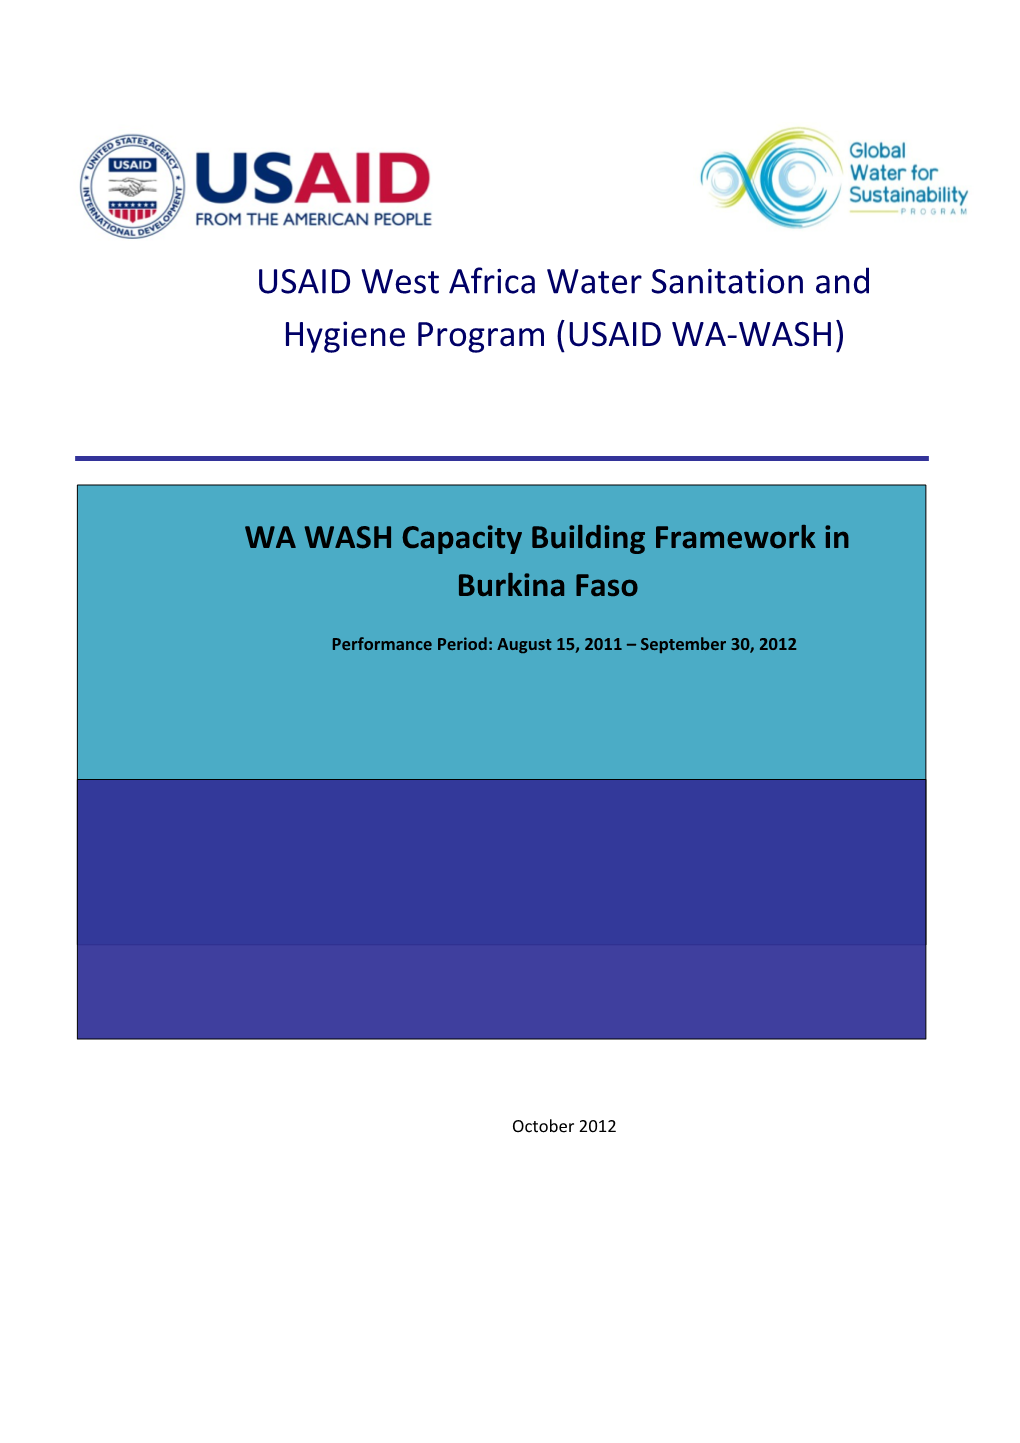 WA WASH Capacity Building Framework in Burkina Faso